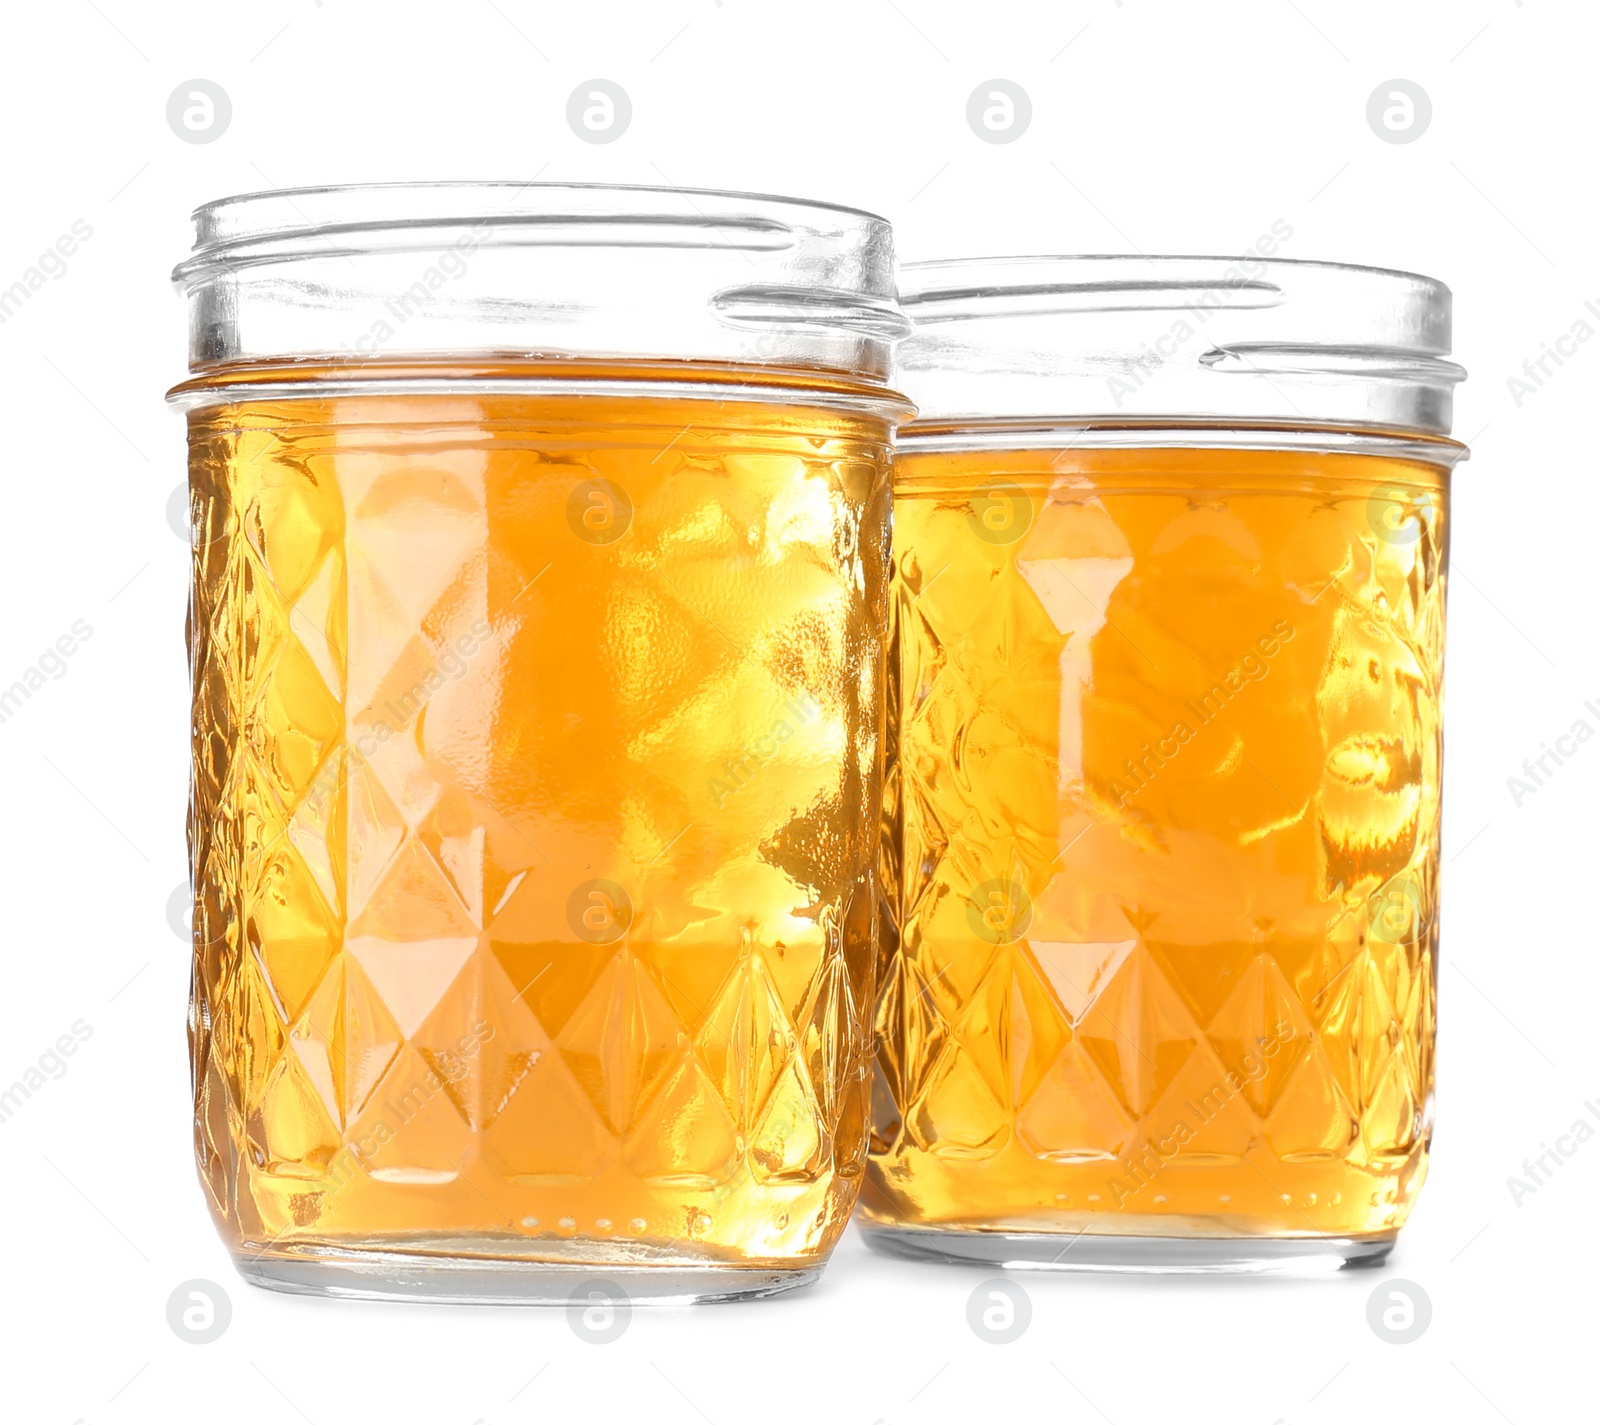 Photo of Two jars of fresh apple juice on white background